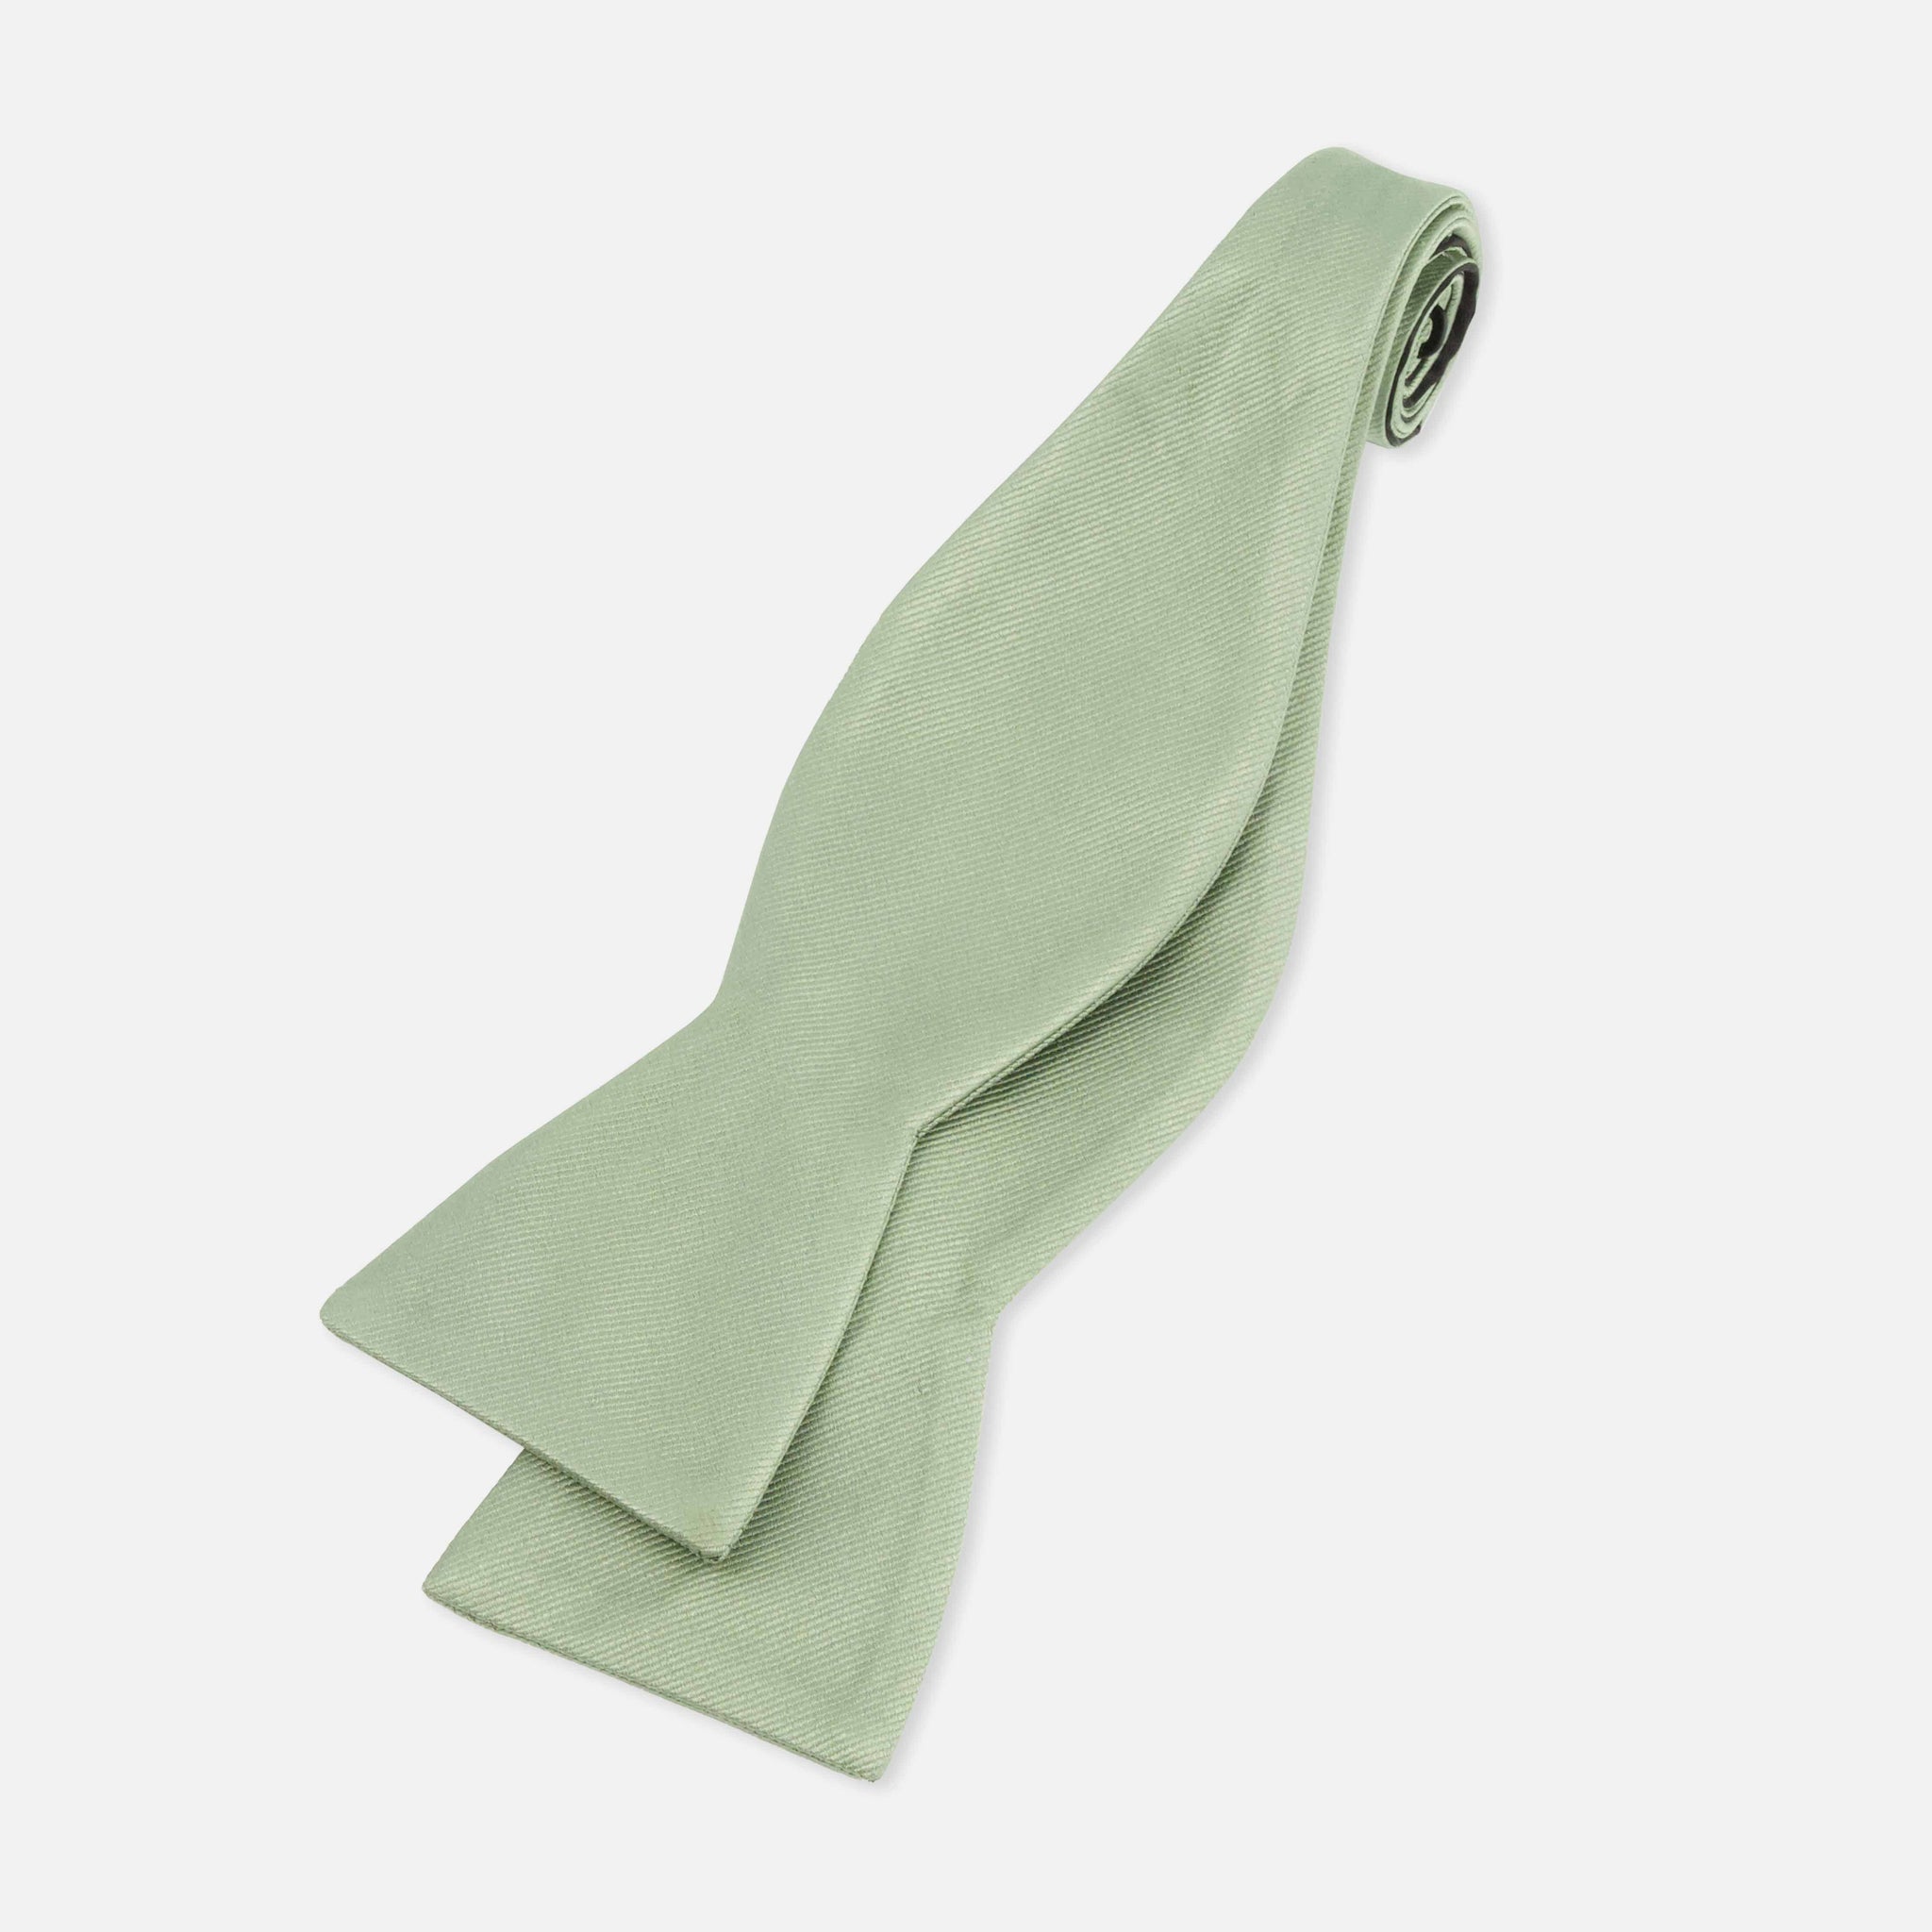 Grosgrain Solid Sage Green Bow Tie by Tie Bar